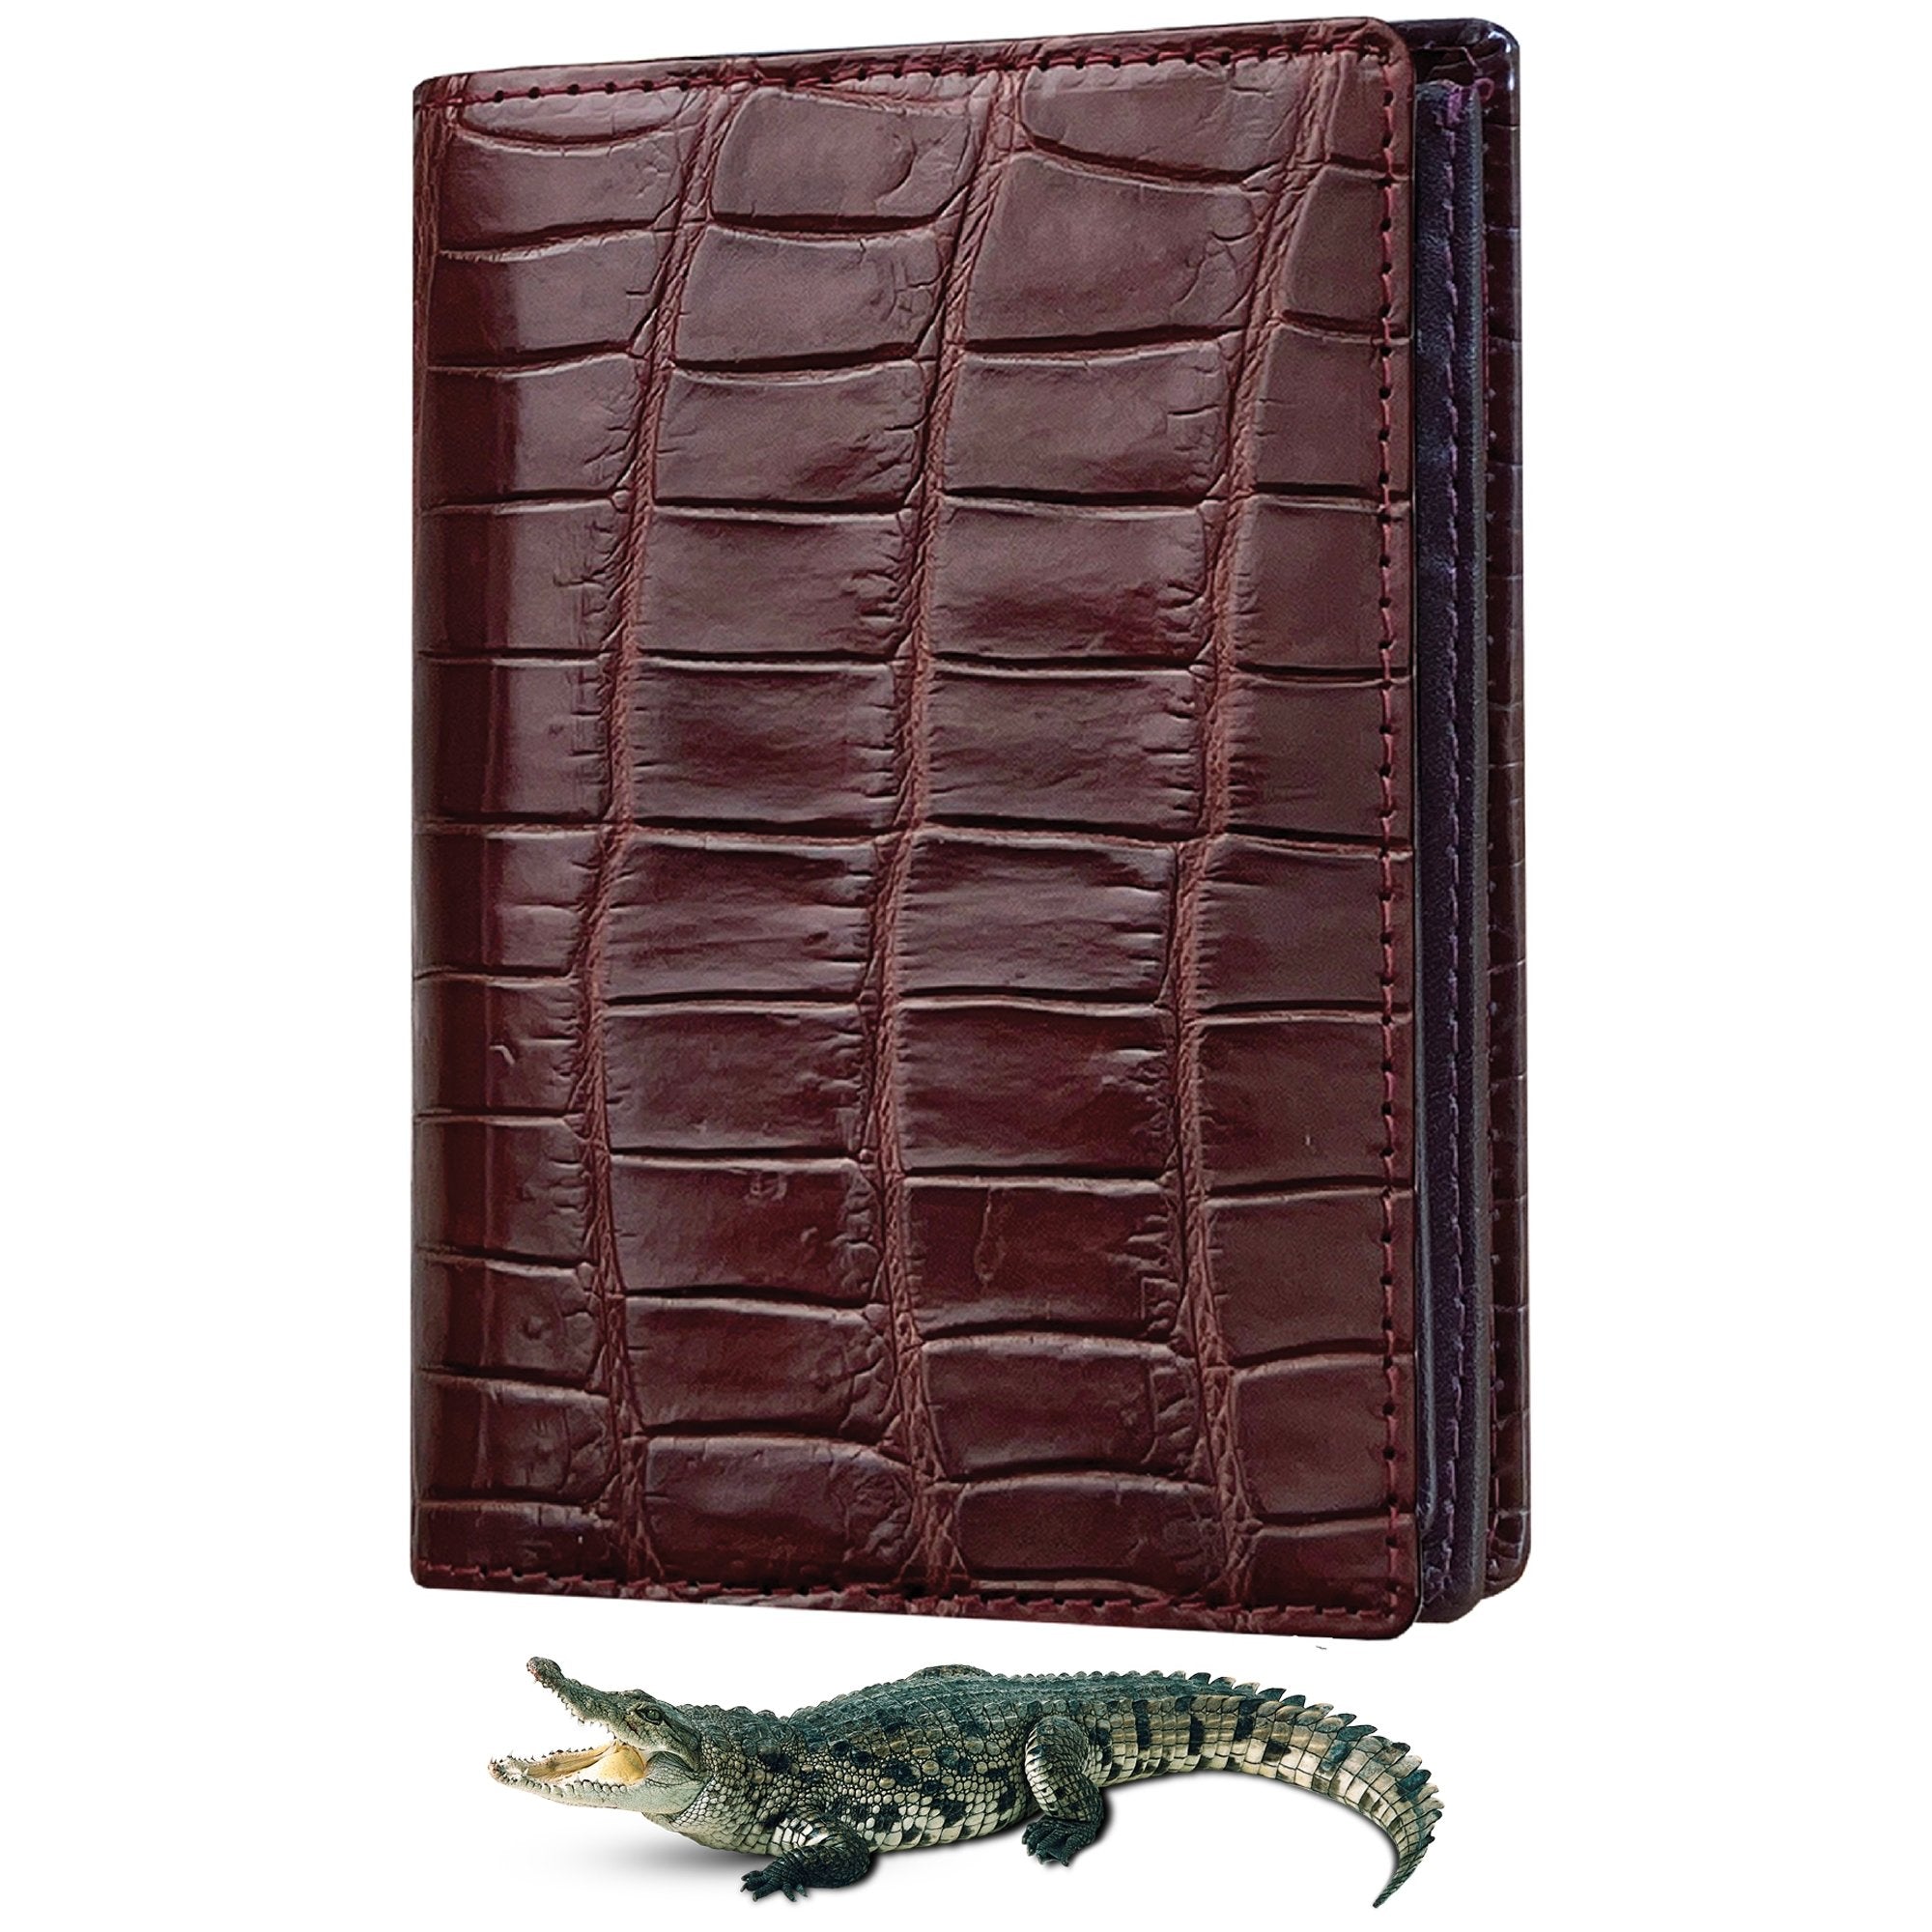 Large Capacity Alligator Leather Vertical Bifold Wallet | Crocodile Credit Card Holder for Men with 15 Card Slots | Dark Brown DUN33 - Vinacreations